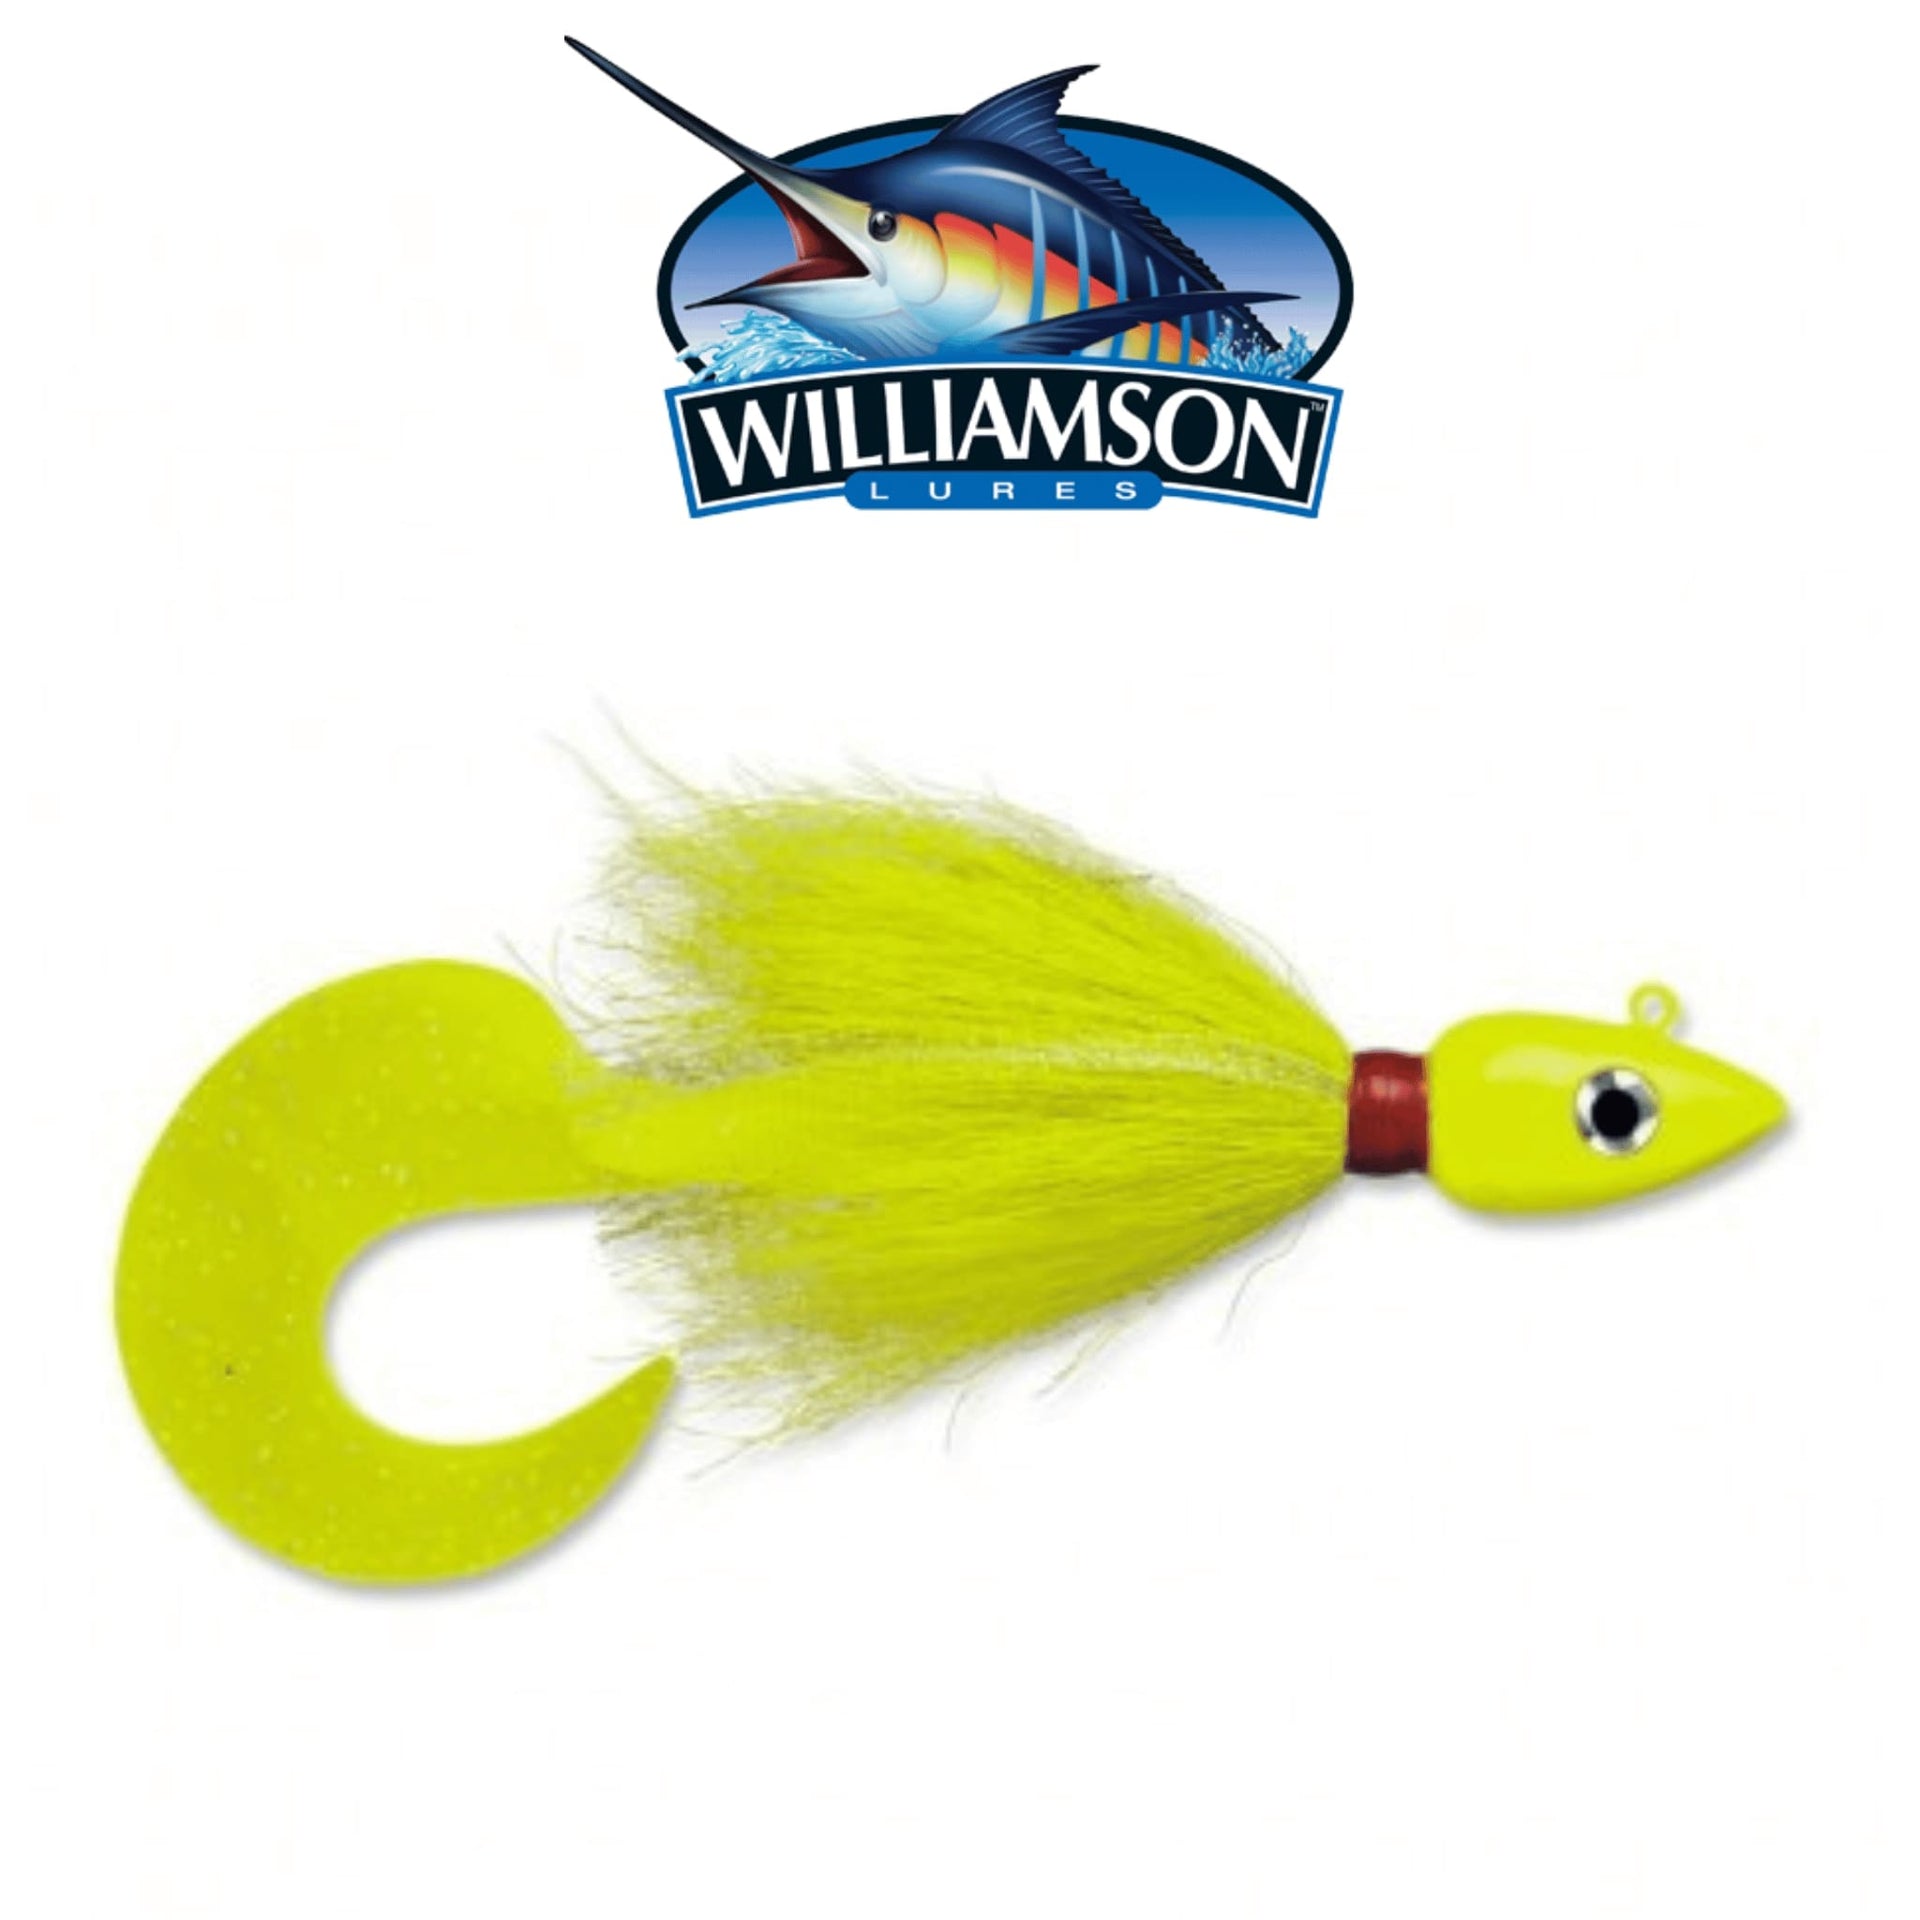 Williamson Arrow Head Bucktail Jig – Fat Catch